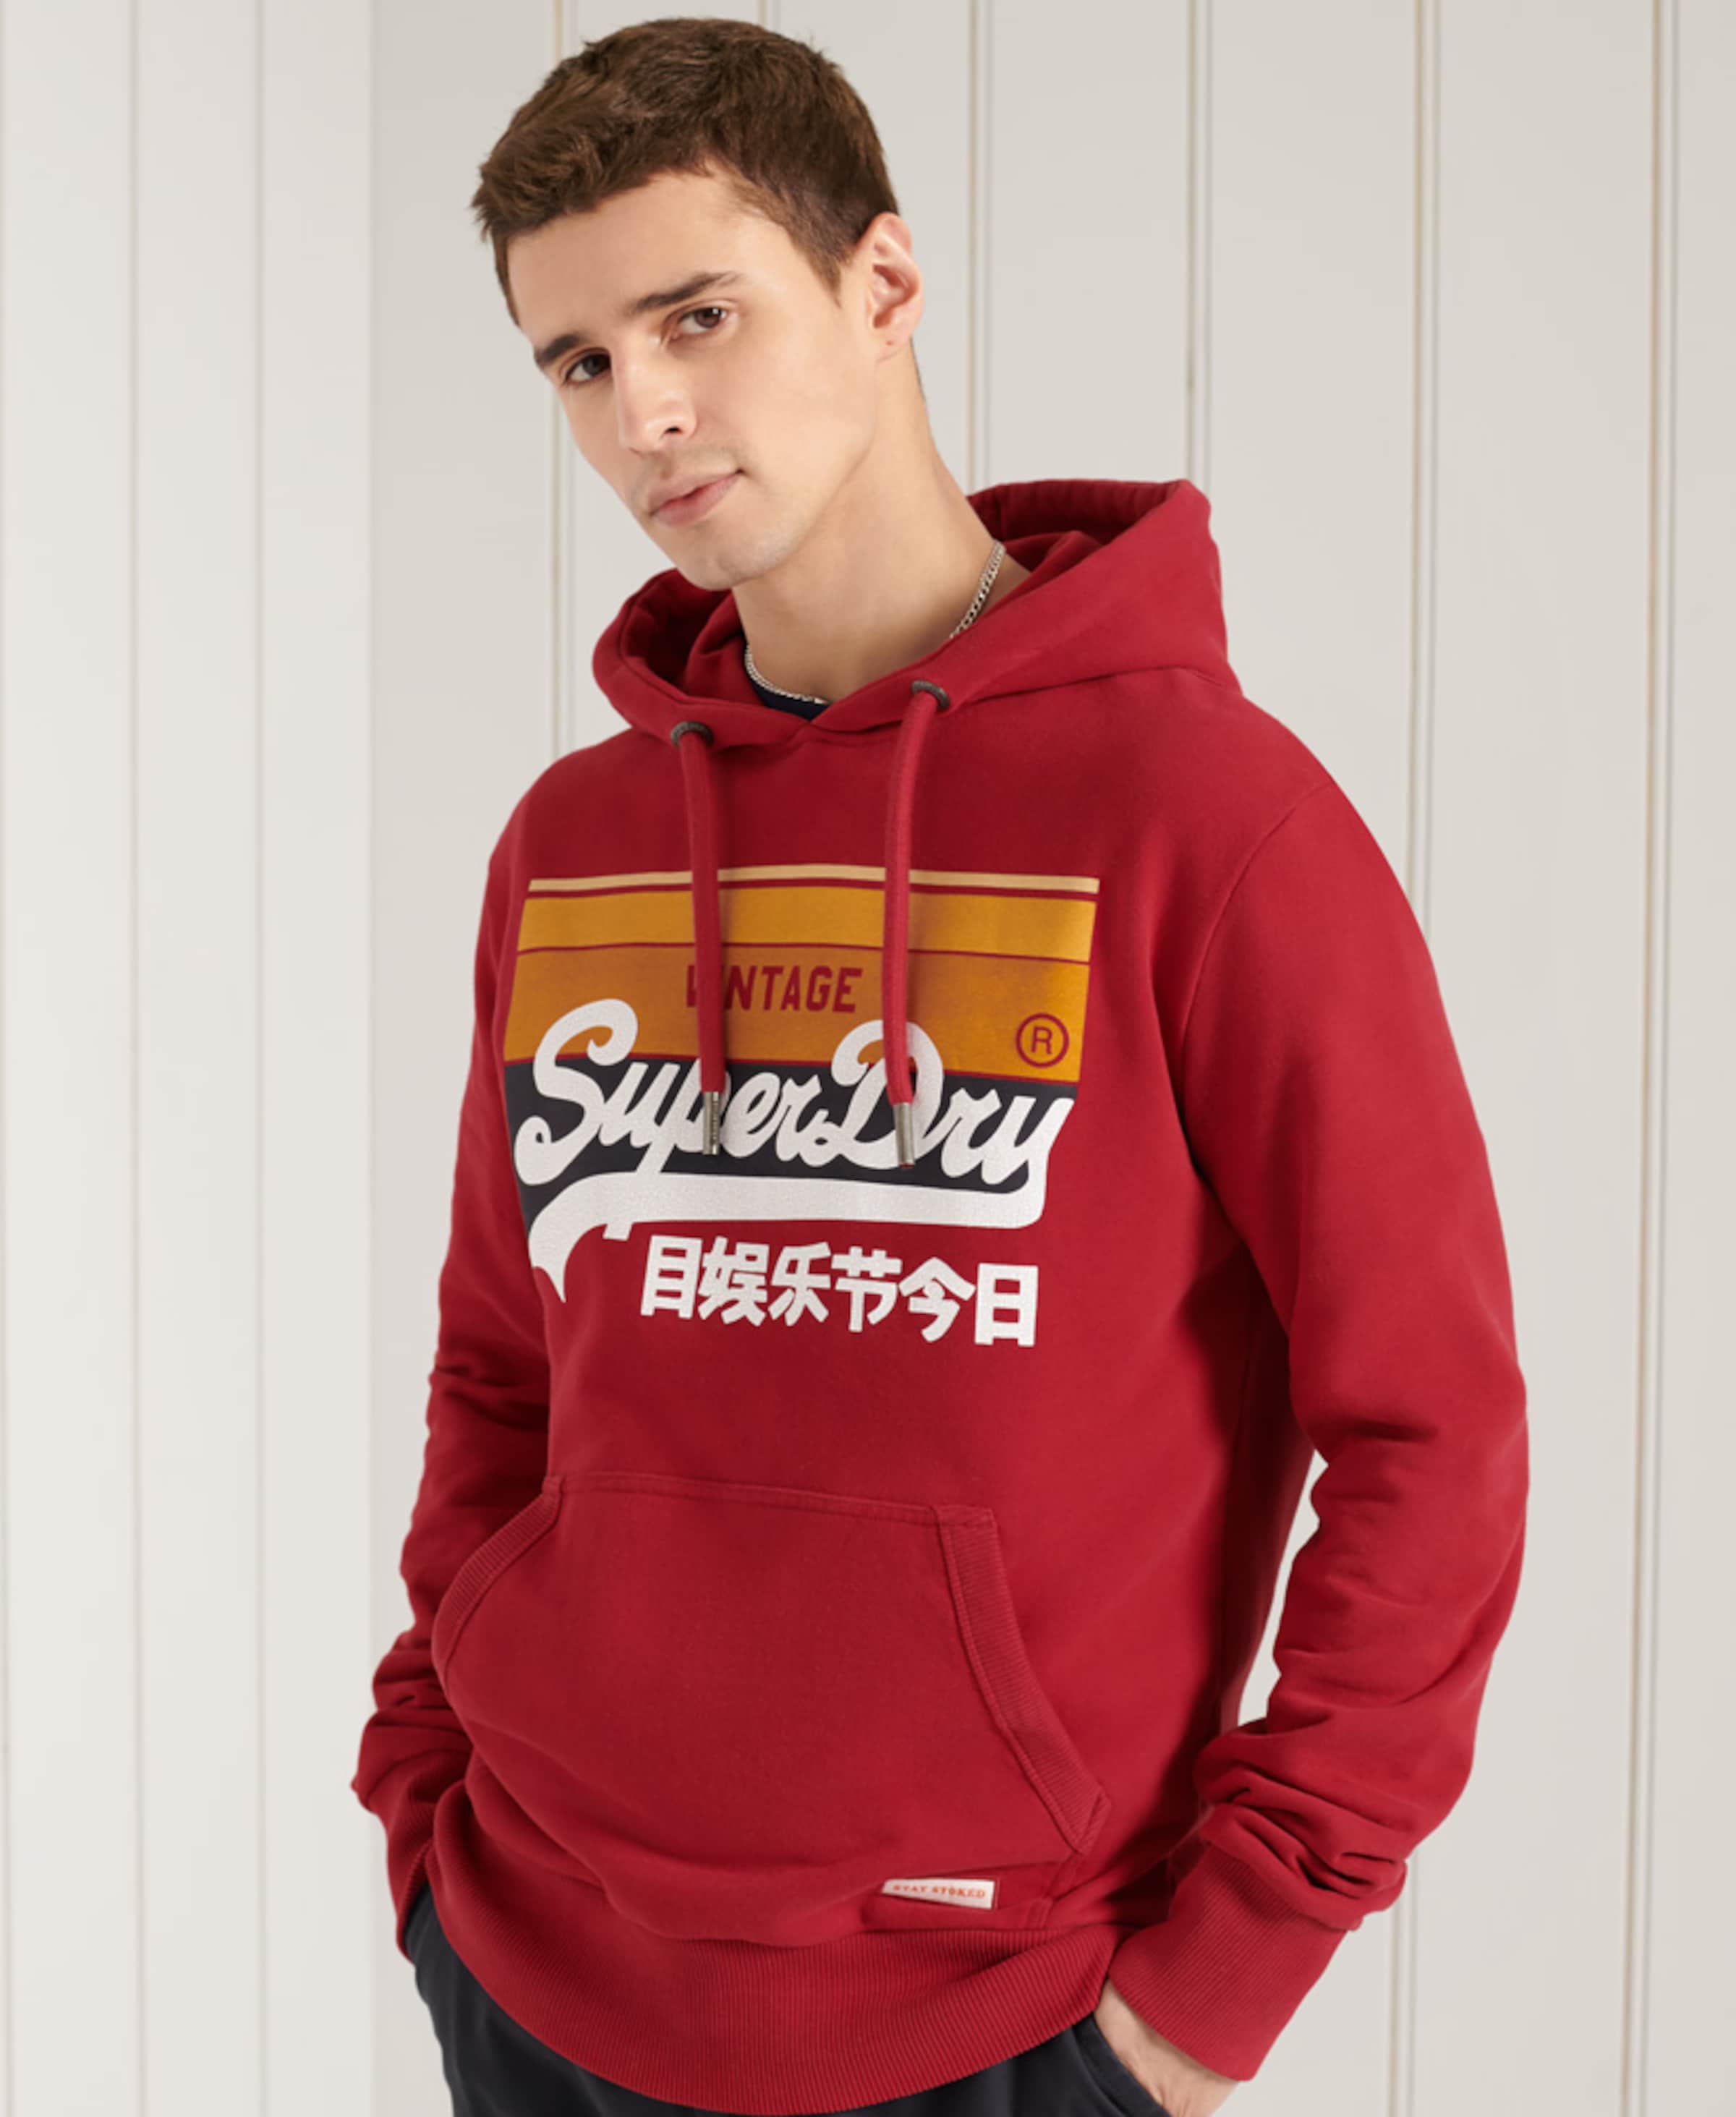 Männer Sportarten Superdry Sweatshirt in Dunkelrot - TA39544